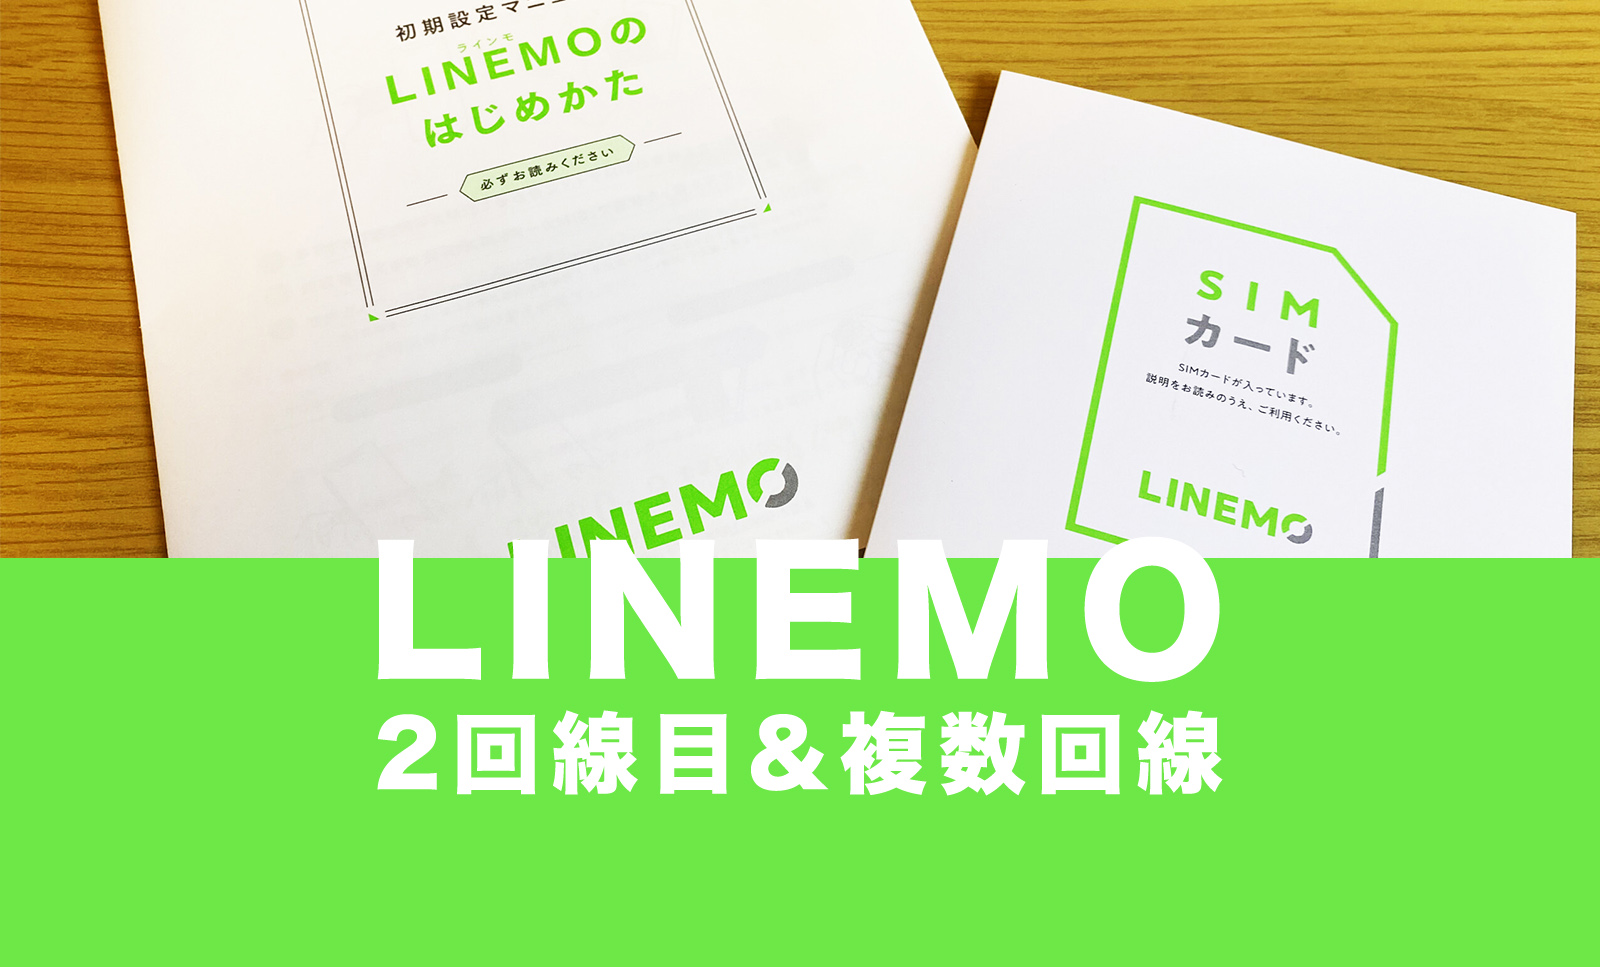 LINEMO(ラインモ)は何回線まで複数回線を同一名義で契約できるのか解説。のサムネイル画像